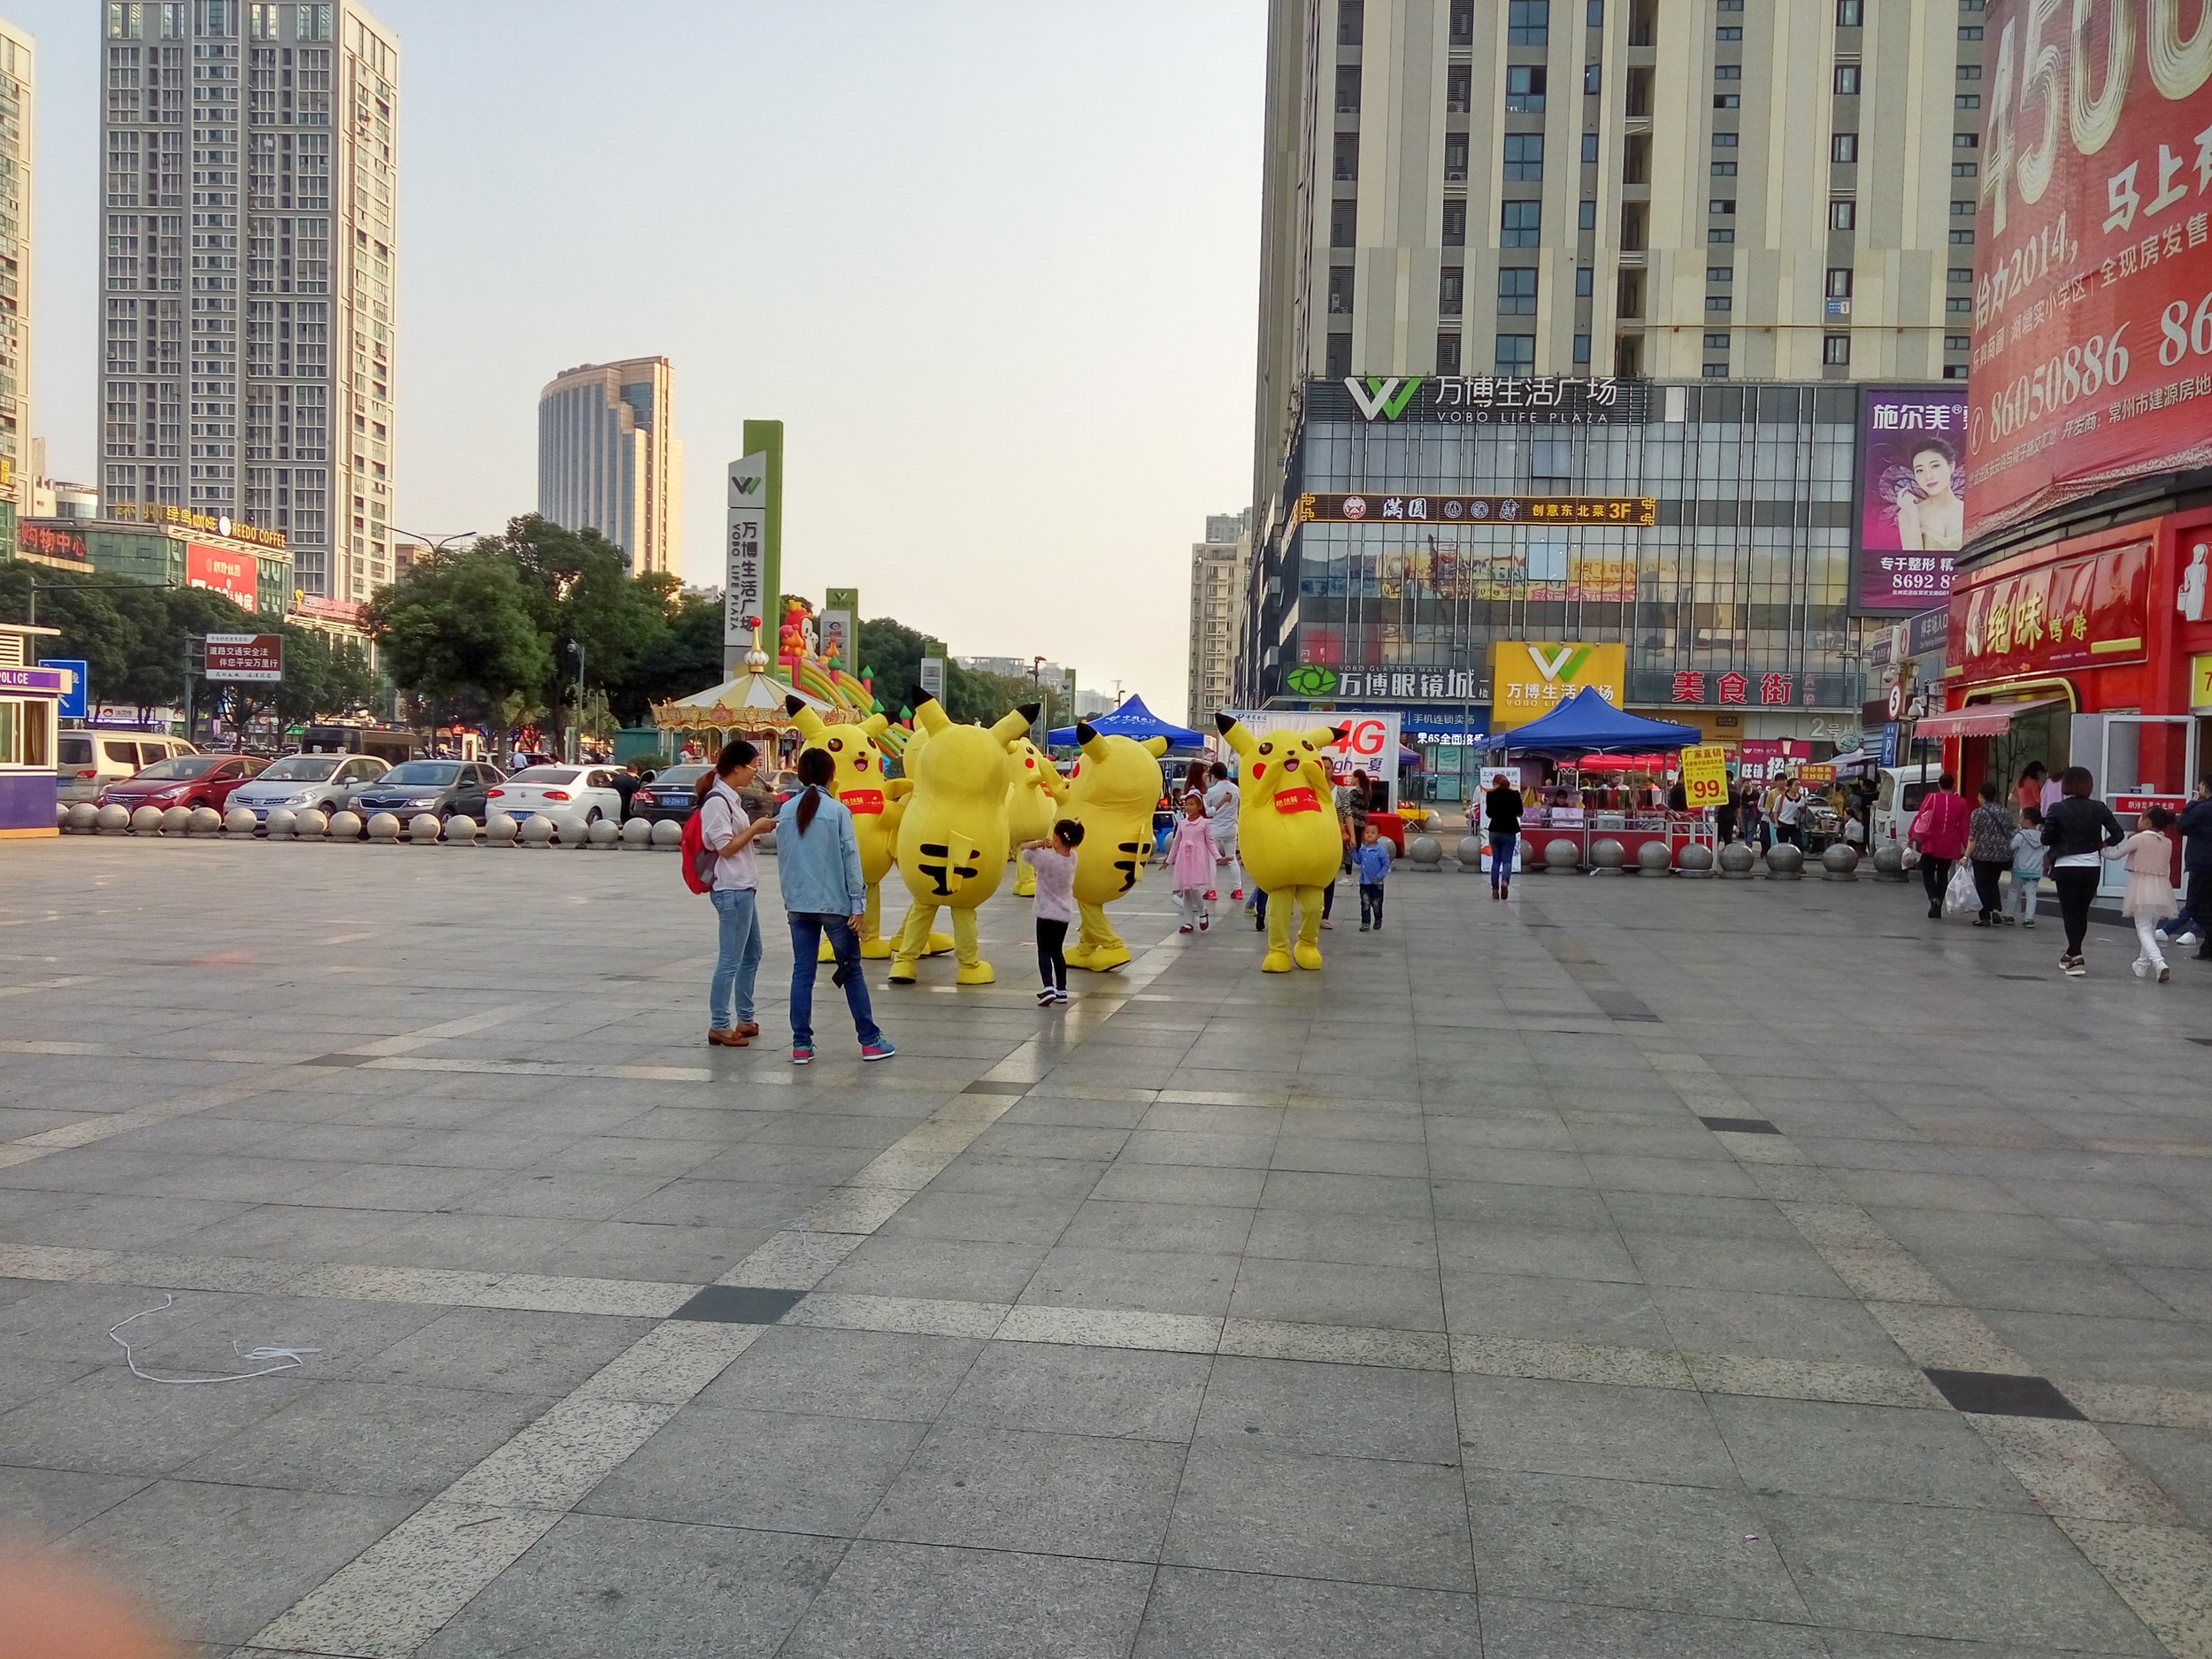 A gaggle of Pikachus entertain a few children.